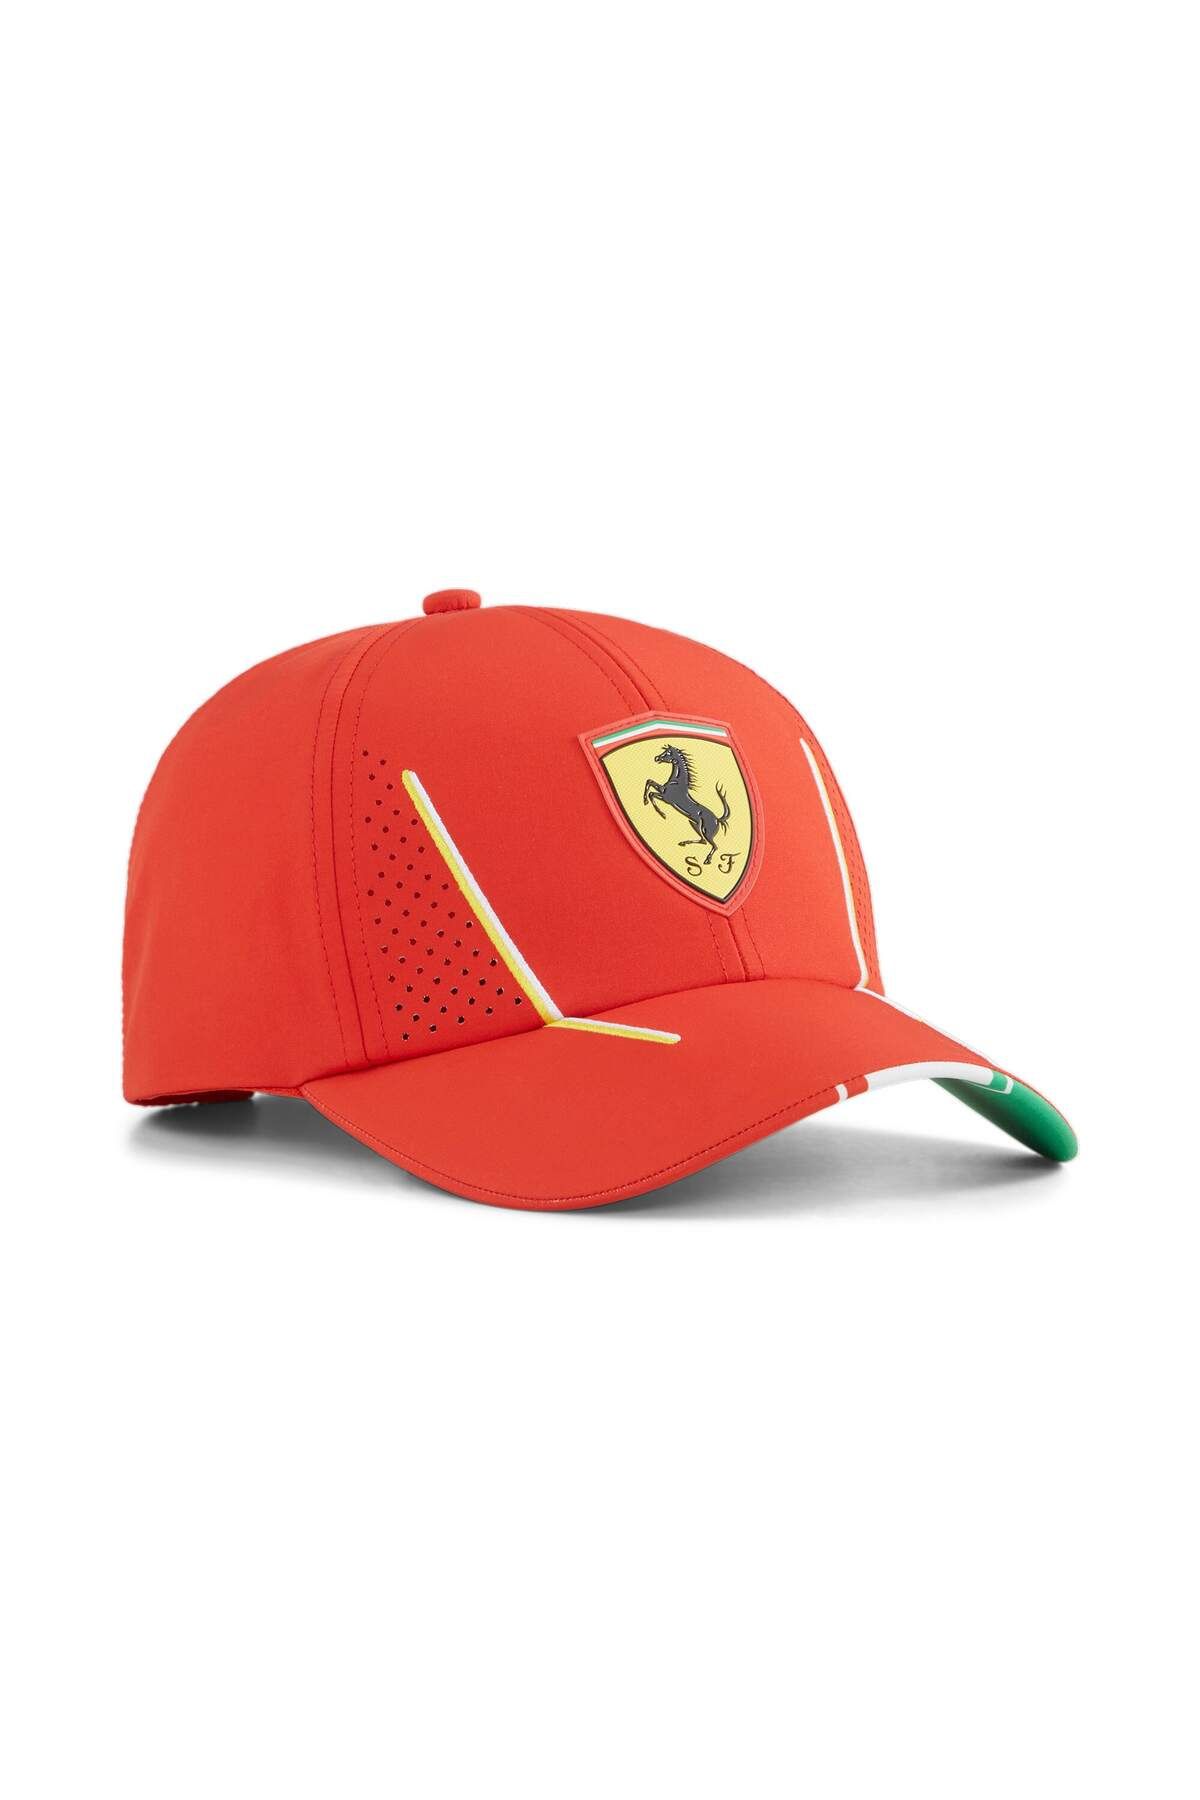 Puma Scuderia Ferrari Team Şapka